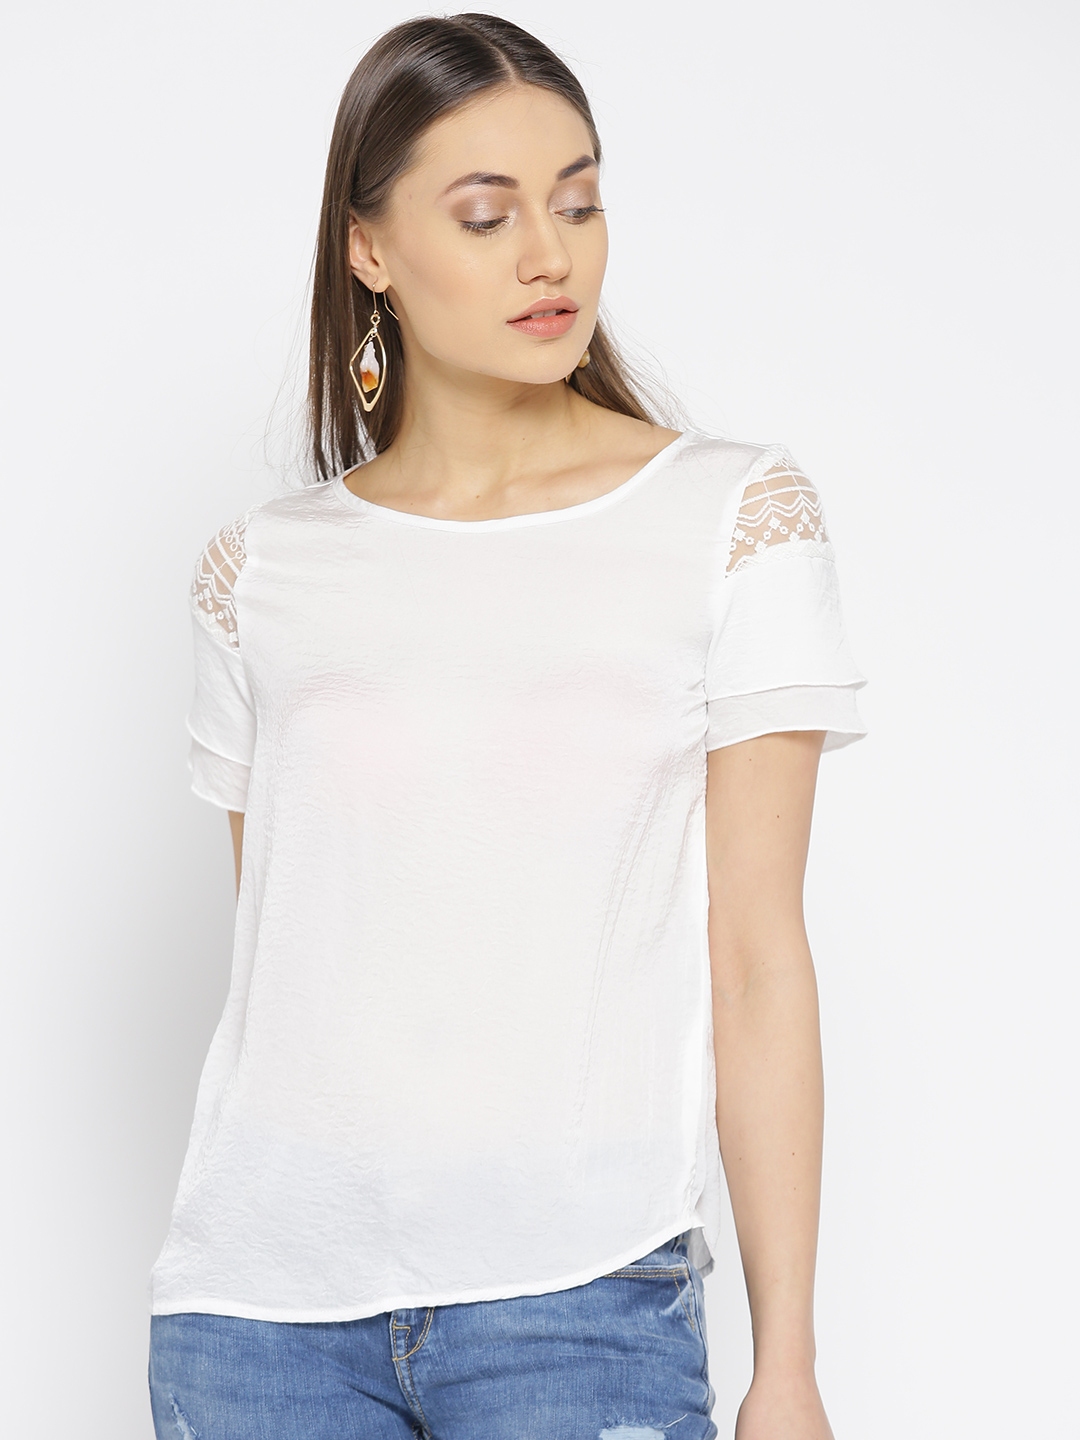 Buy Vero Moda Women White Solid Top - Tops for Women 7077986 | Myntra